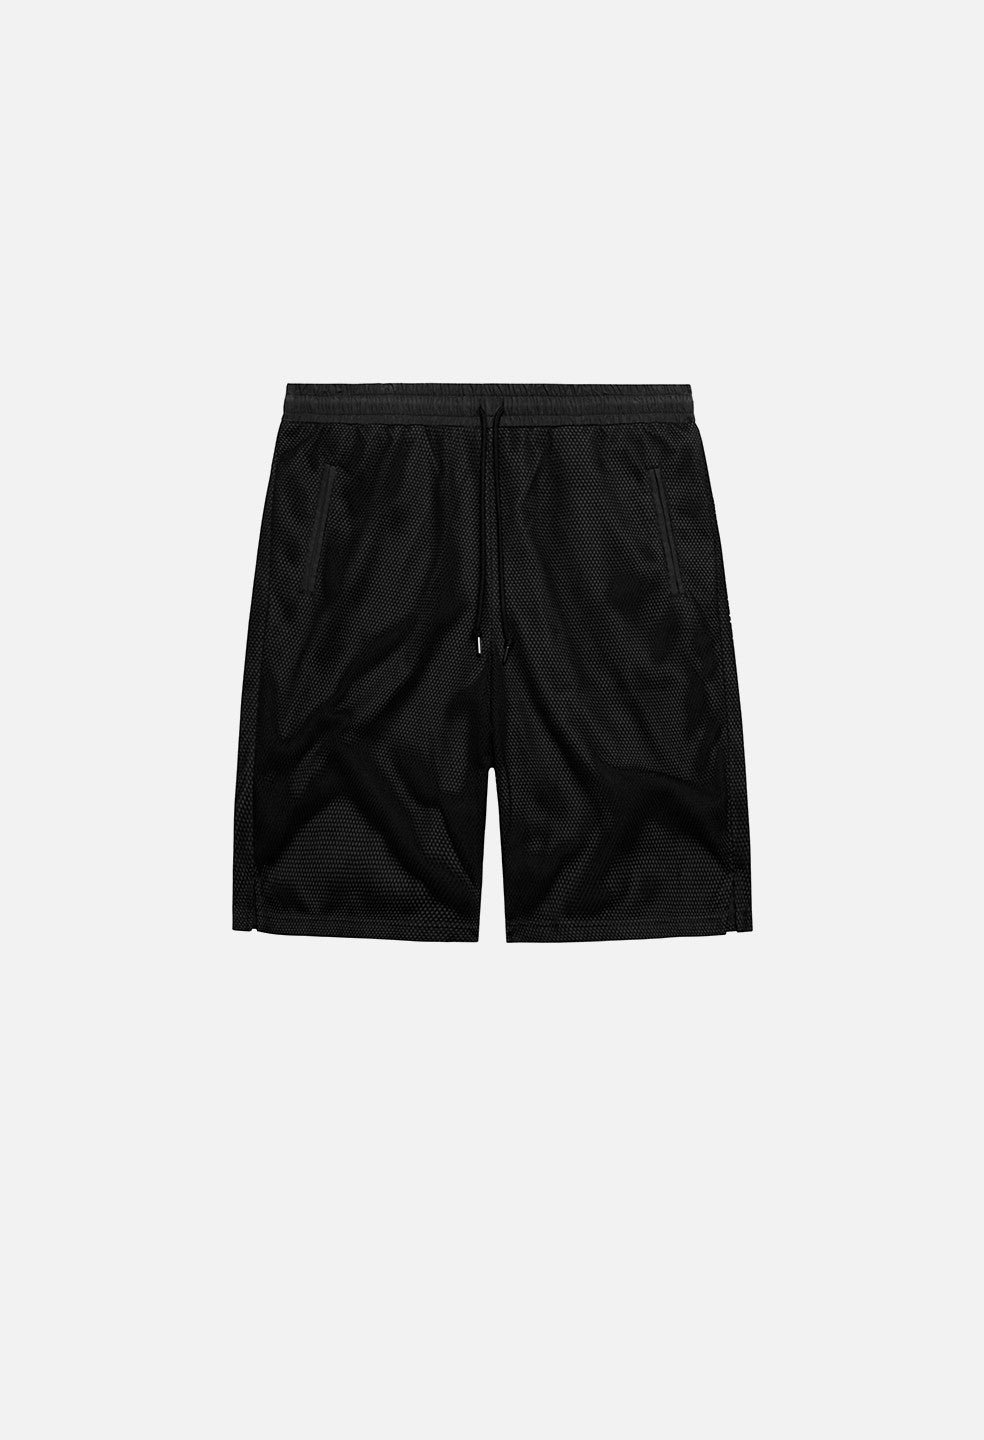 Unknown Mesh Shorts V Black Design